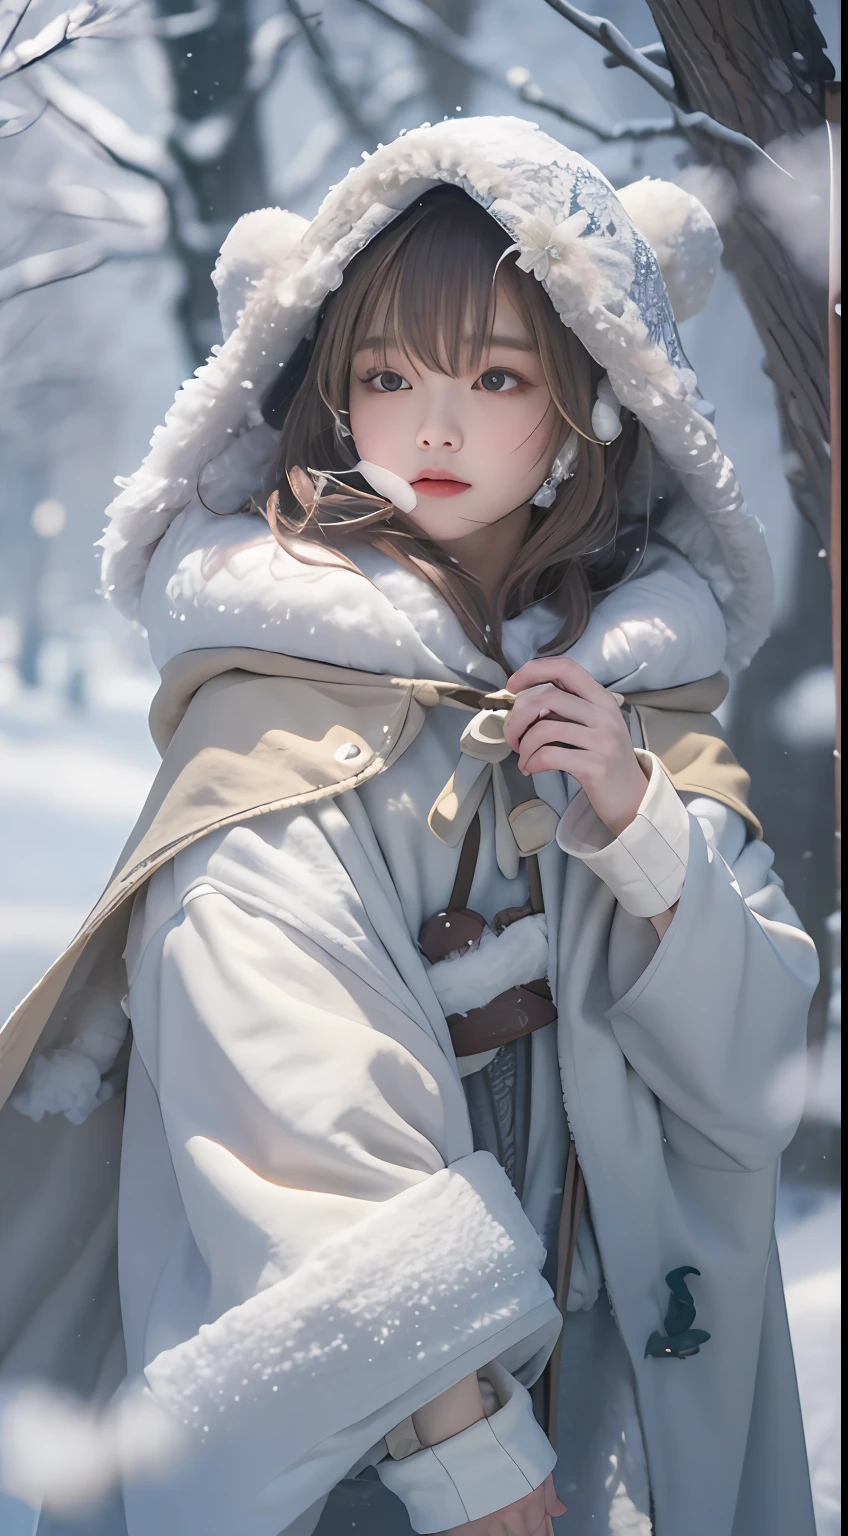 ((Works of masters))，(Ultra-high resolution)，1 girl, run, Lolita costume，cloak (Snow, Outdoor activities in winter:1.2),